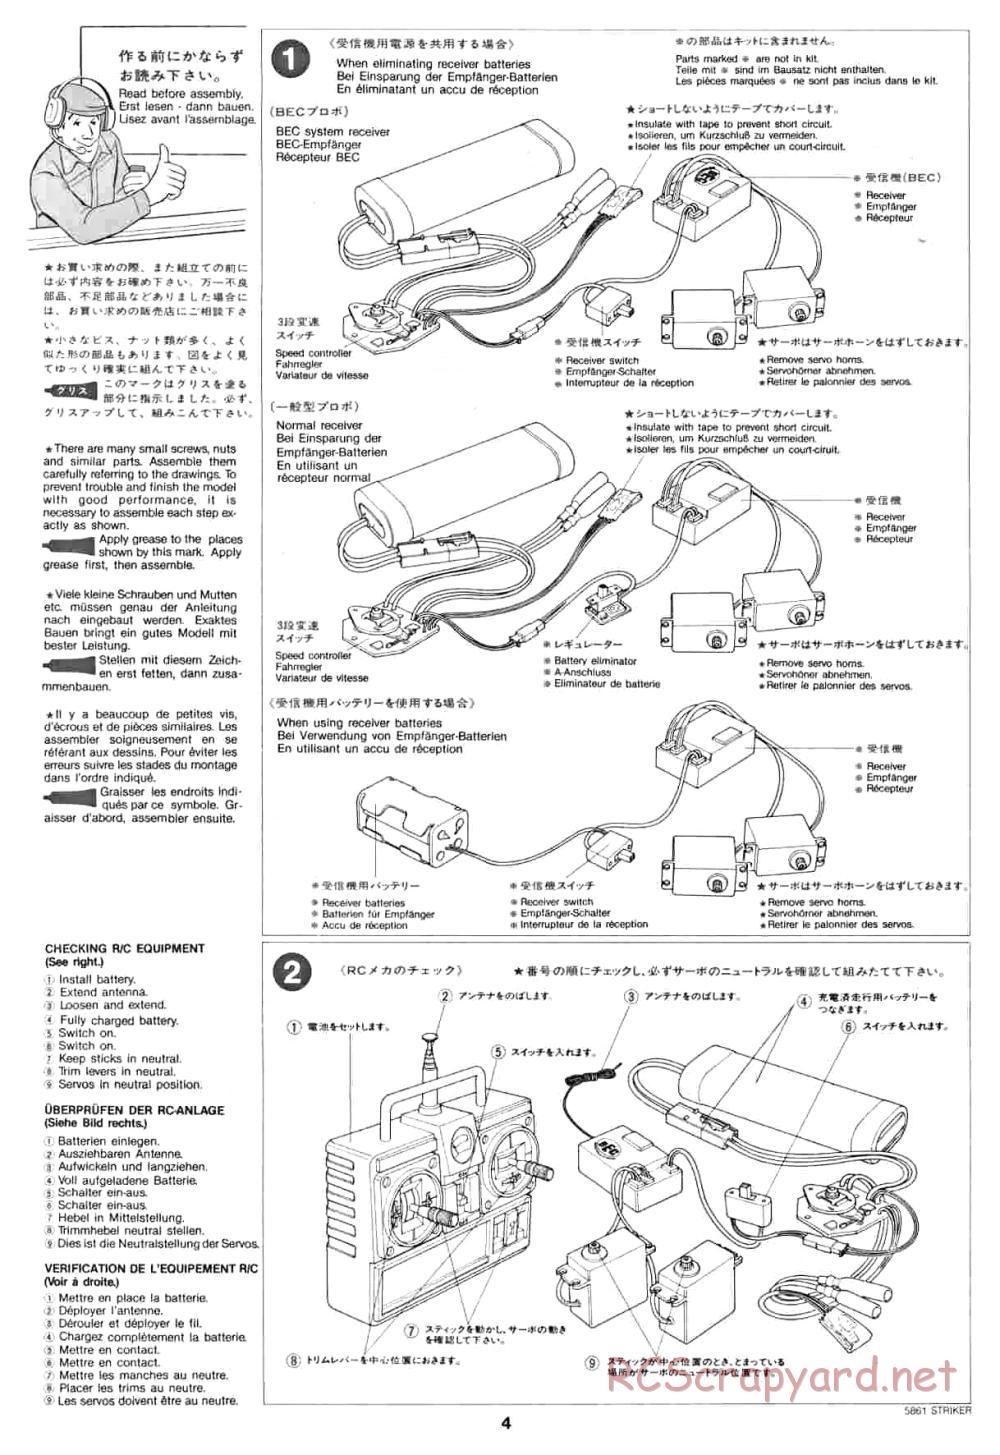 Tamiya - Striker - 58061 - Manual - Page 4